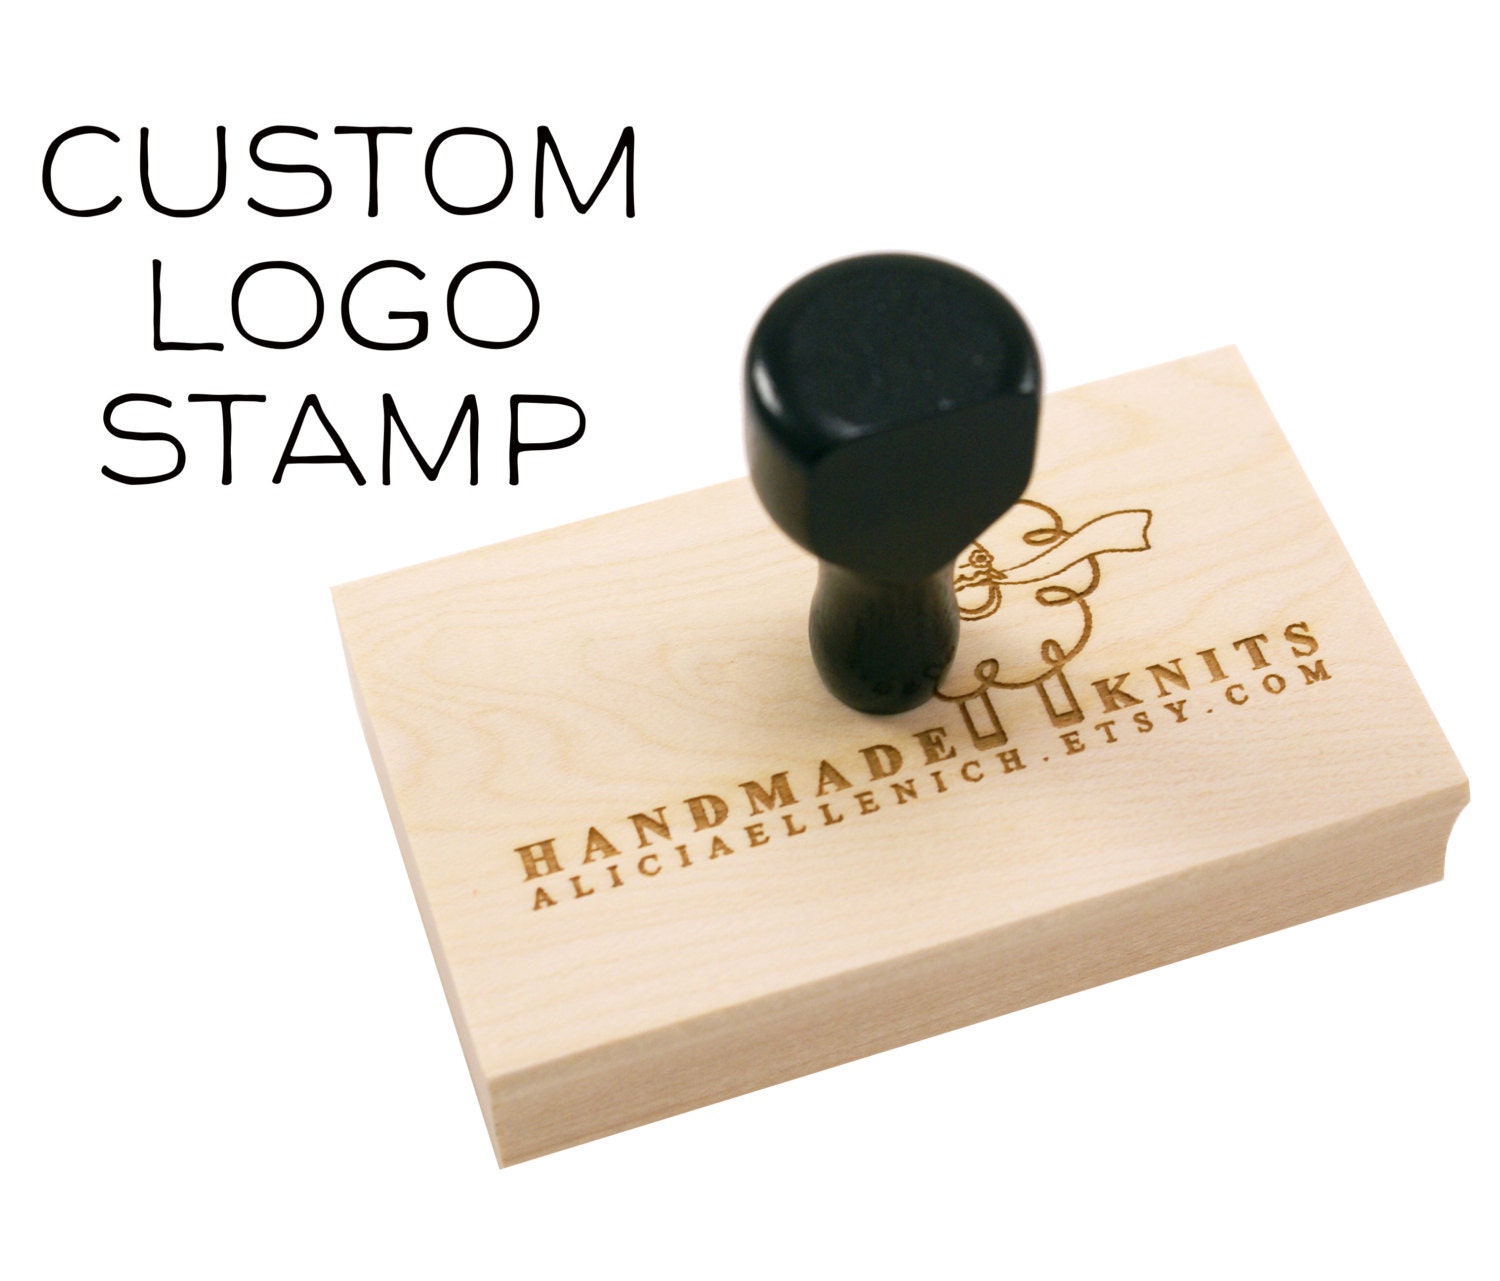 Large CUSTOM LOGO or TEXT Wood Stamp custom logo stamp